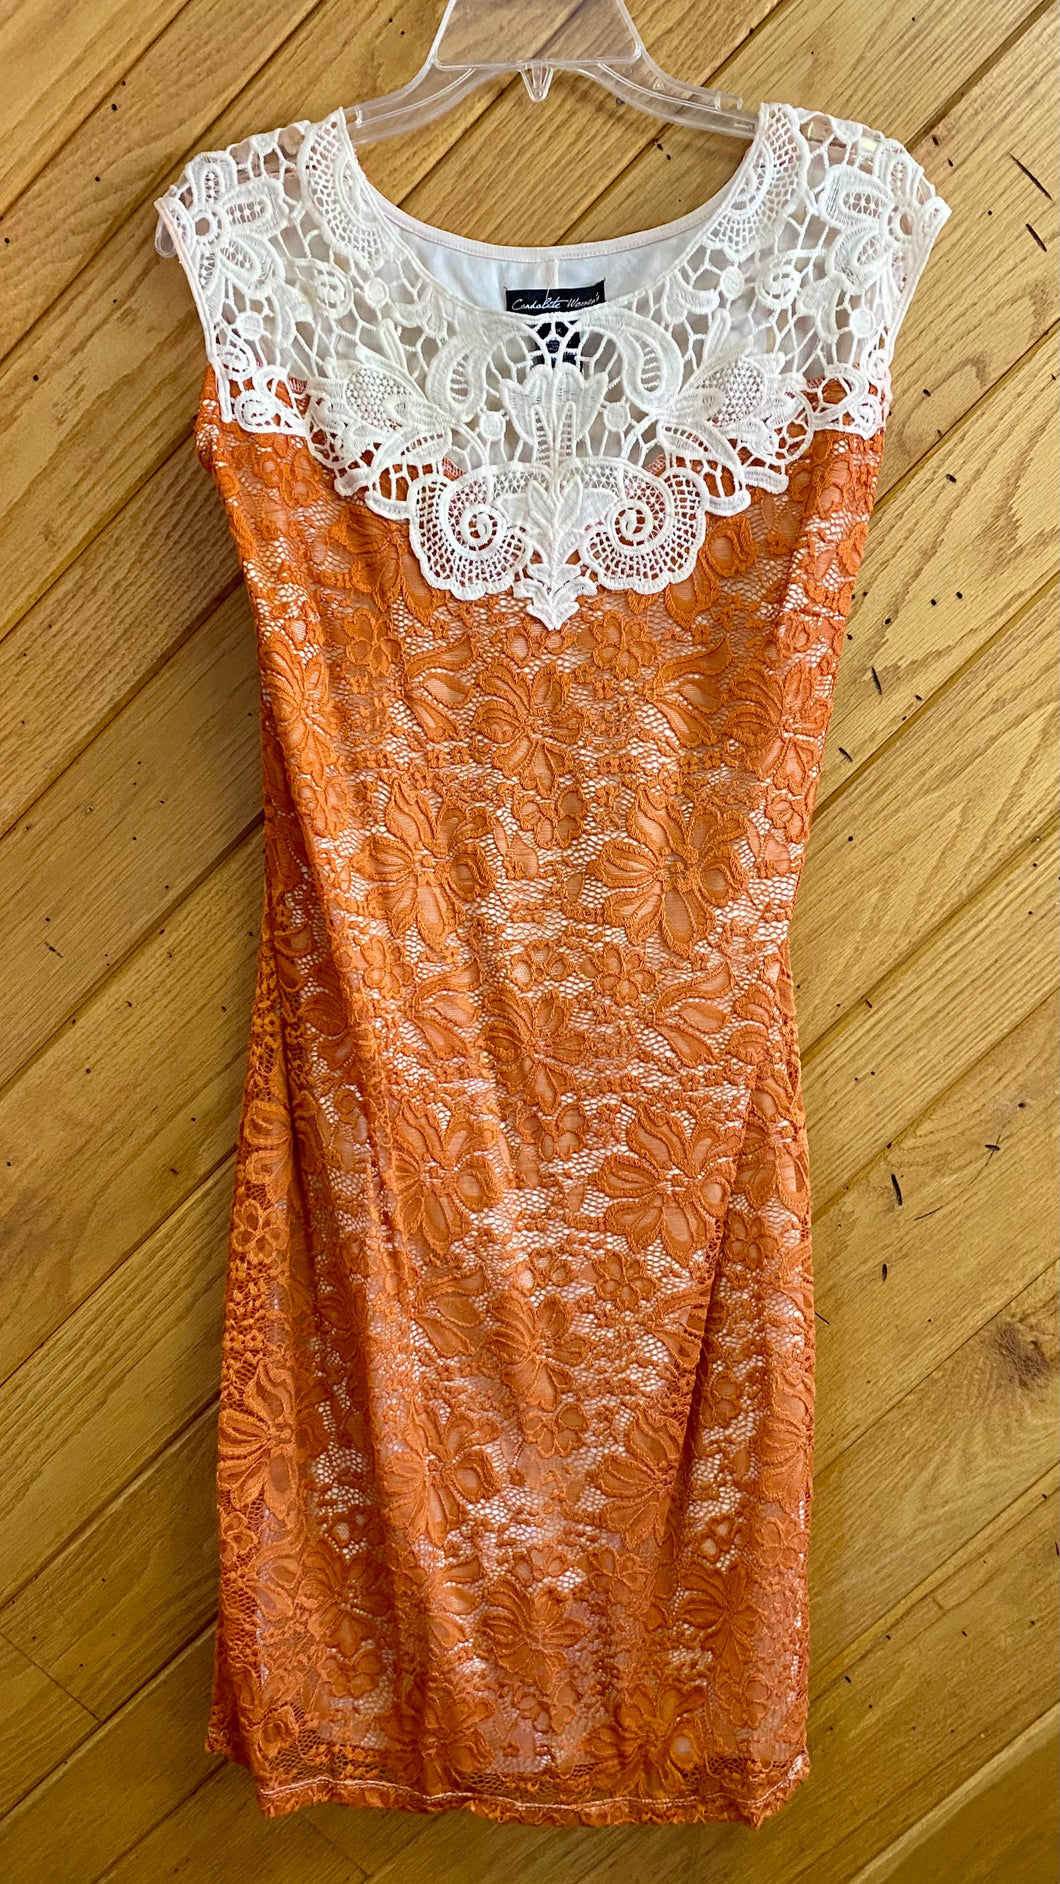 BILL100-D Short Orange Lace Dress. Size 16/18